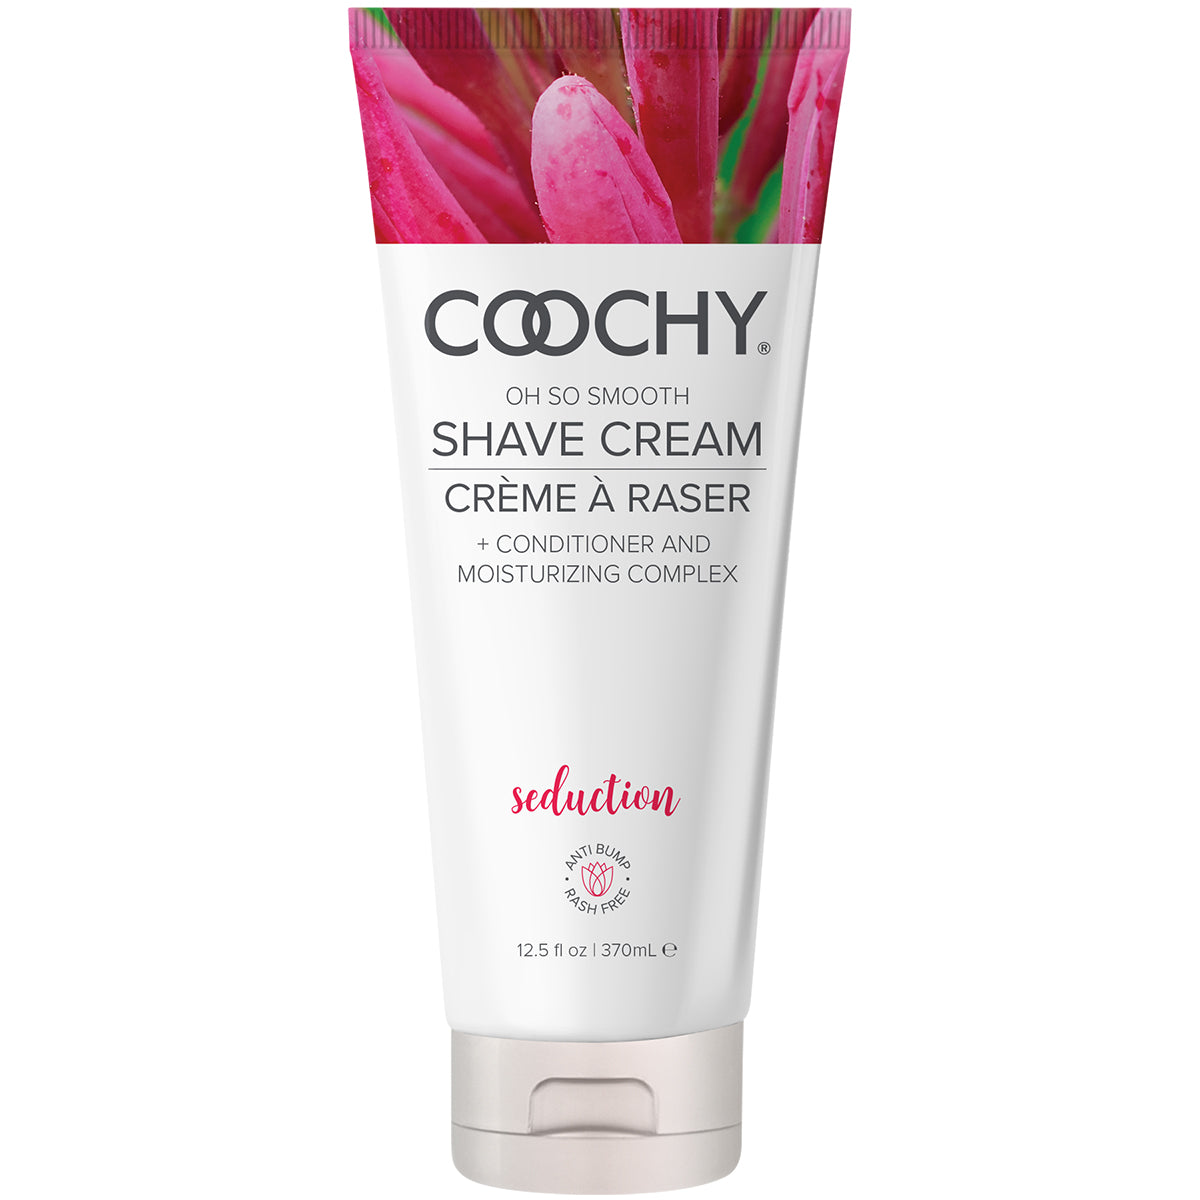 Coochy Shave Cream 12.5oz - Seduction